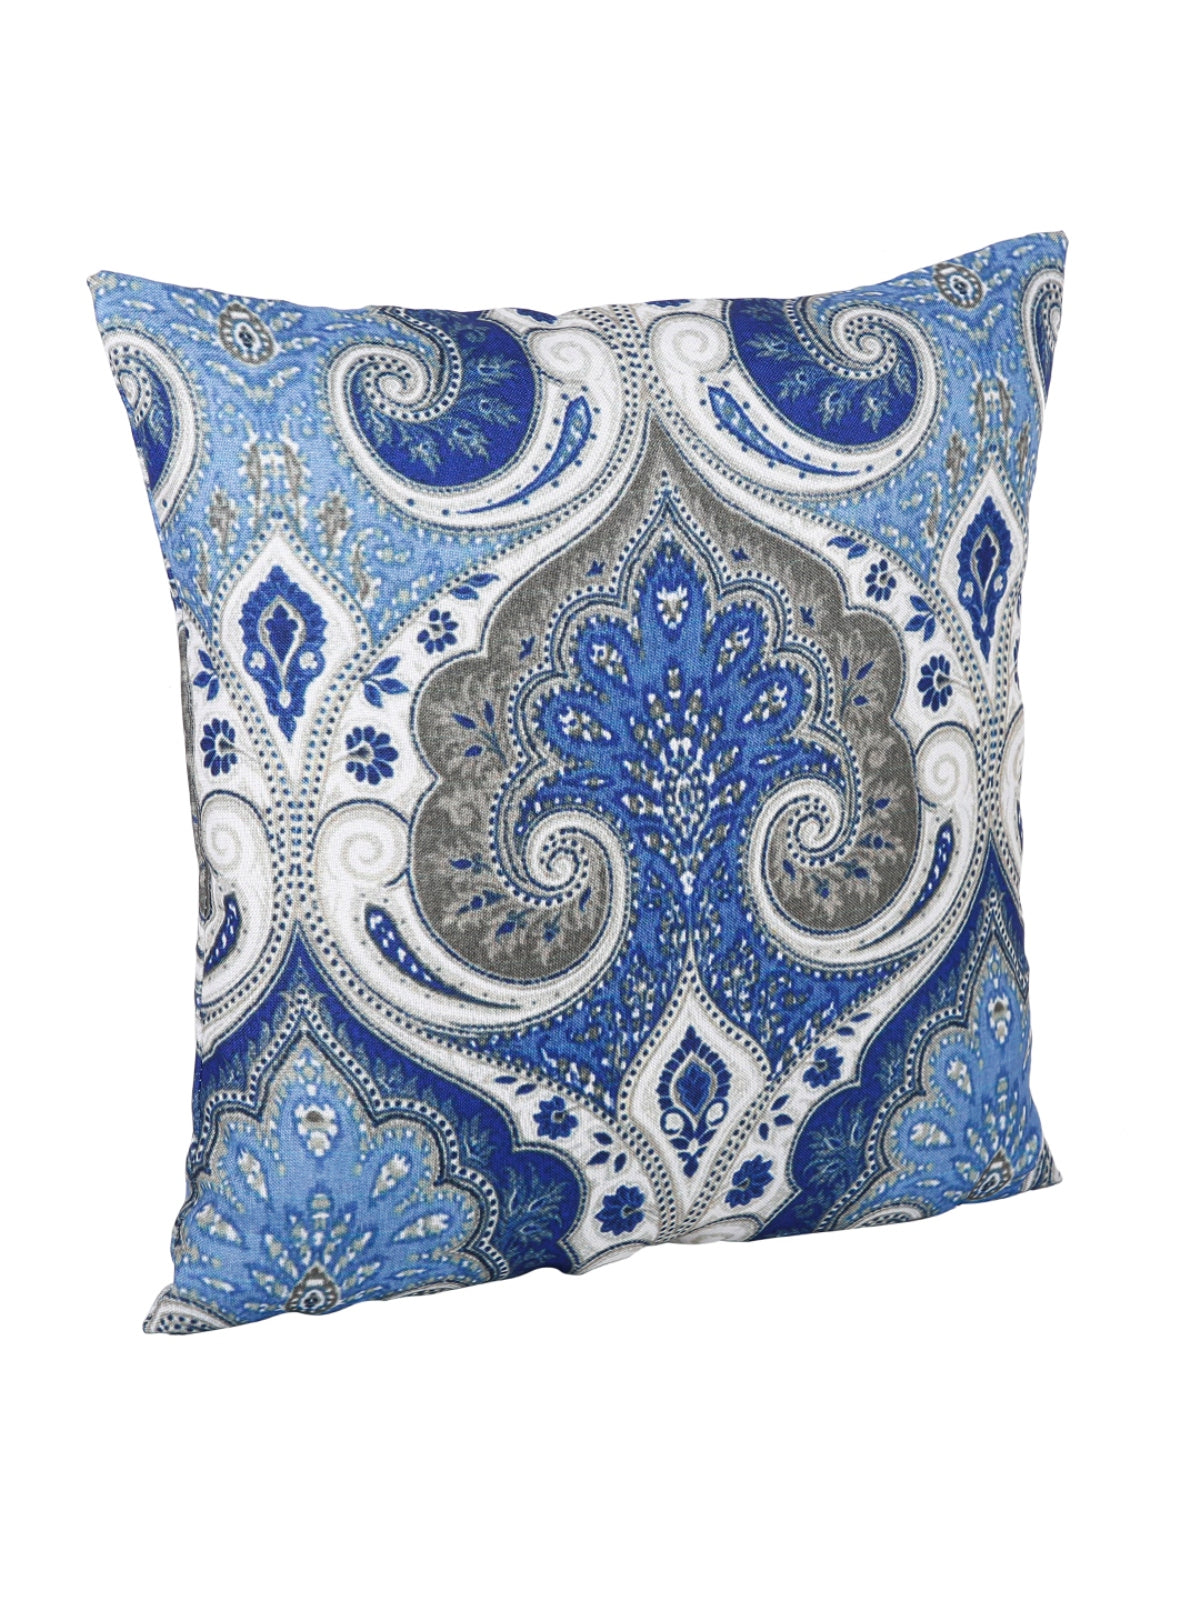 ROMEE Blue Ethnic Motifs Printed Cushion Covers Set of 5